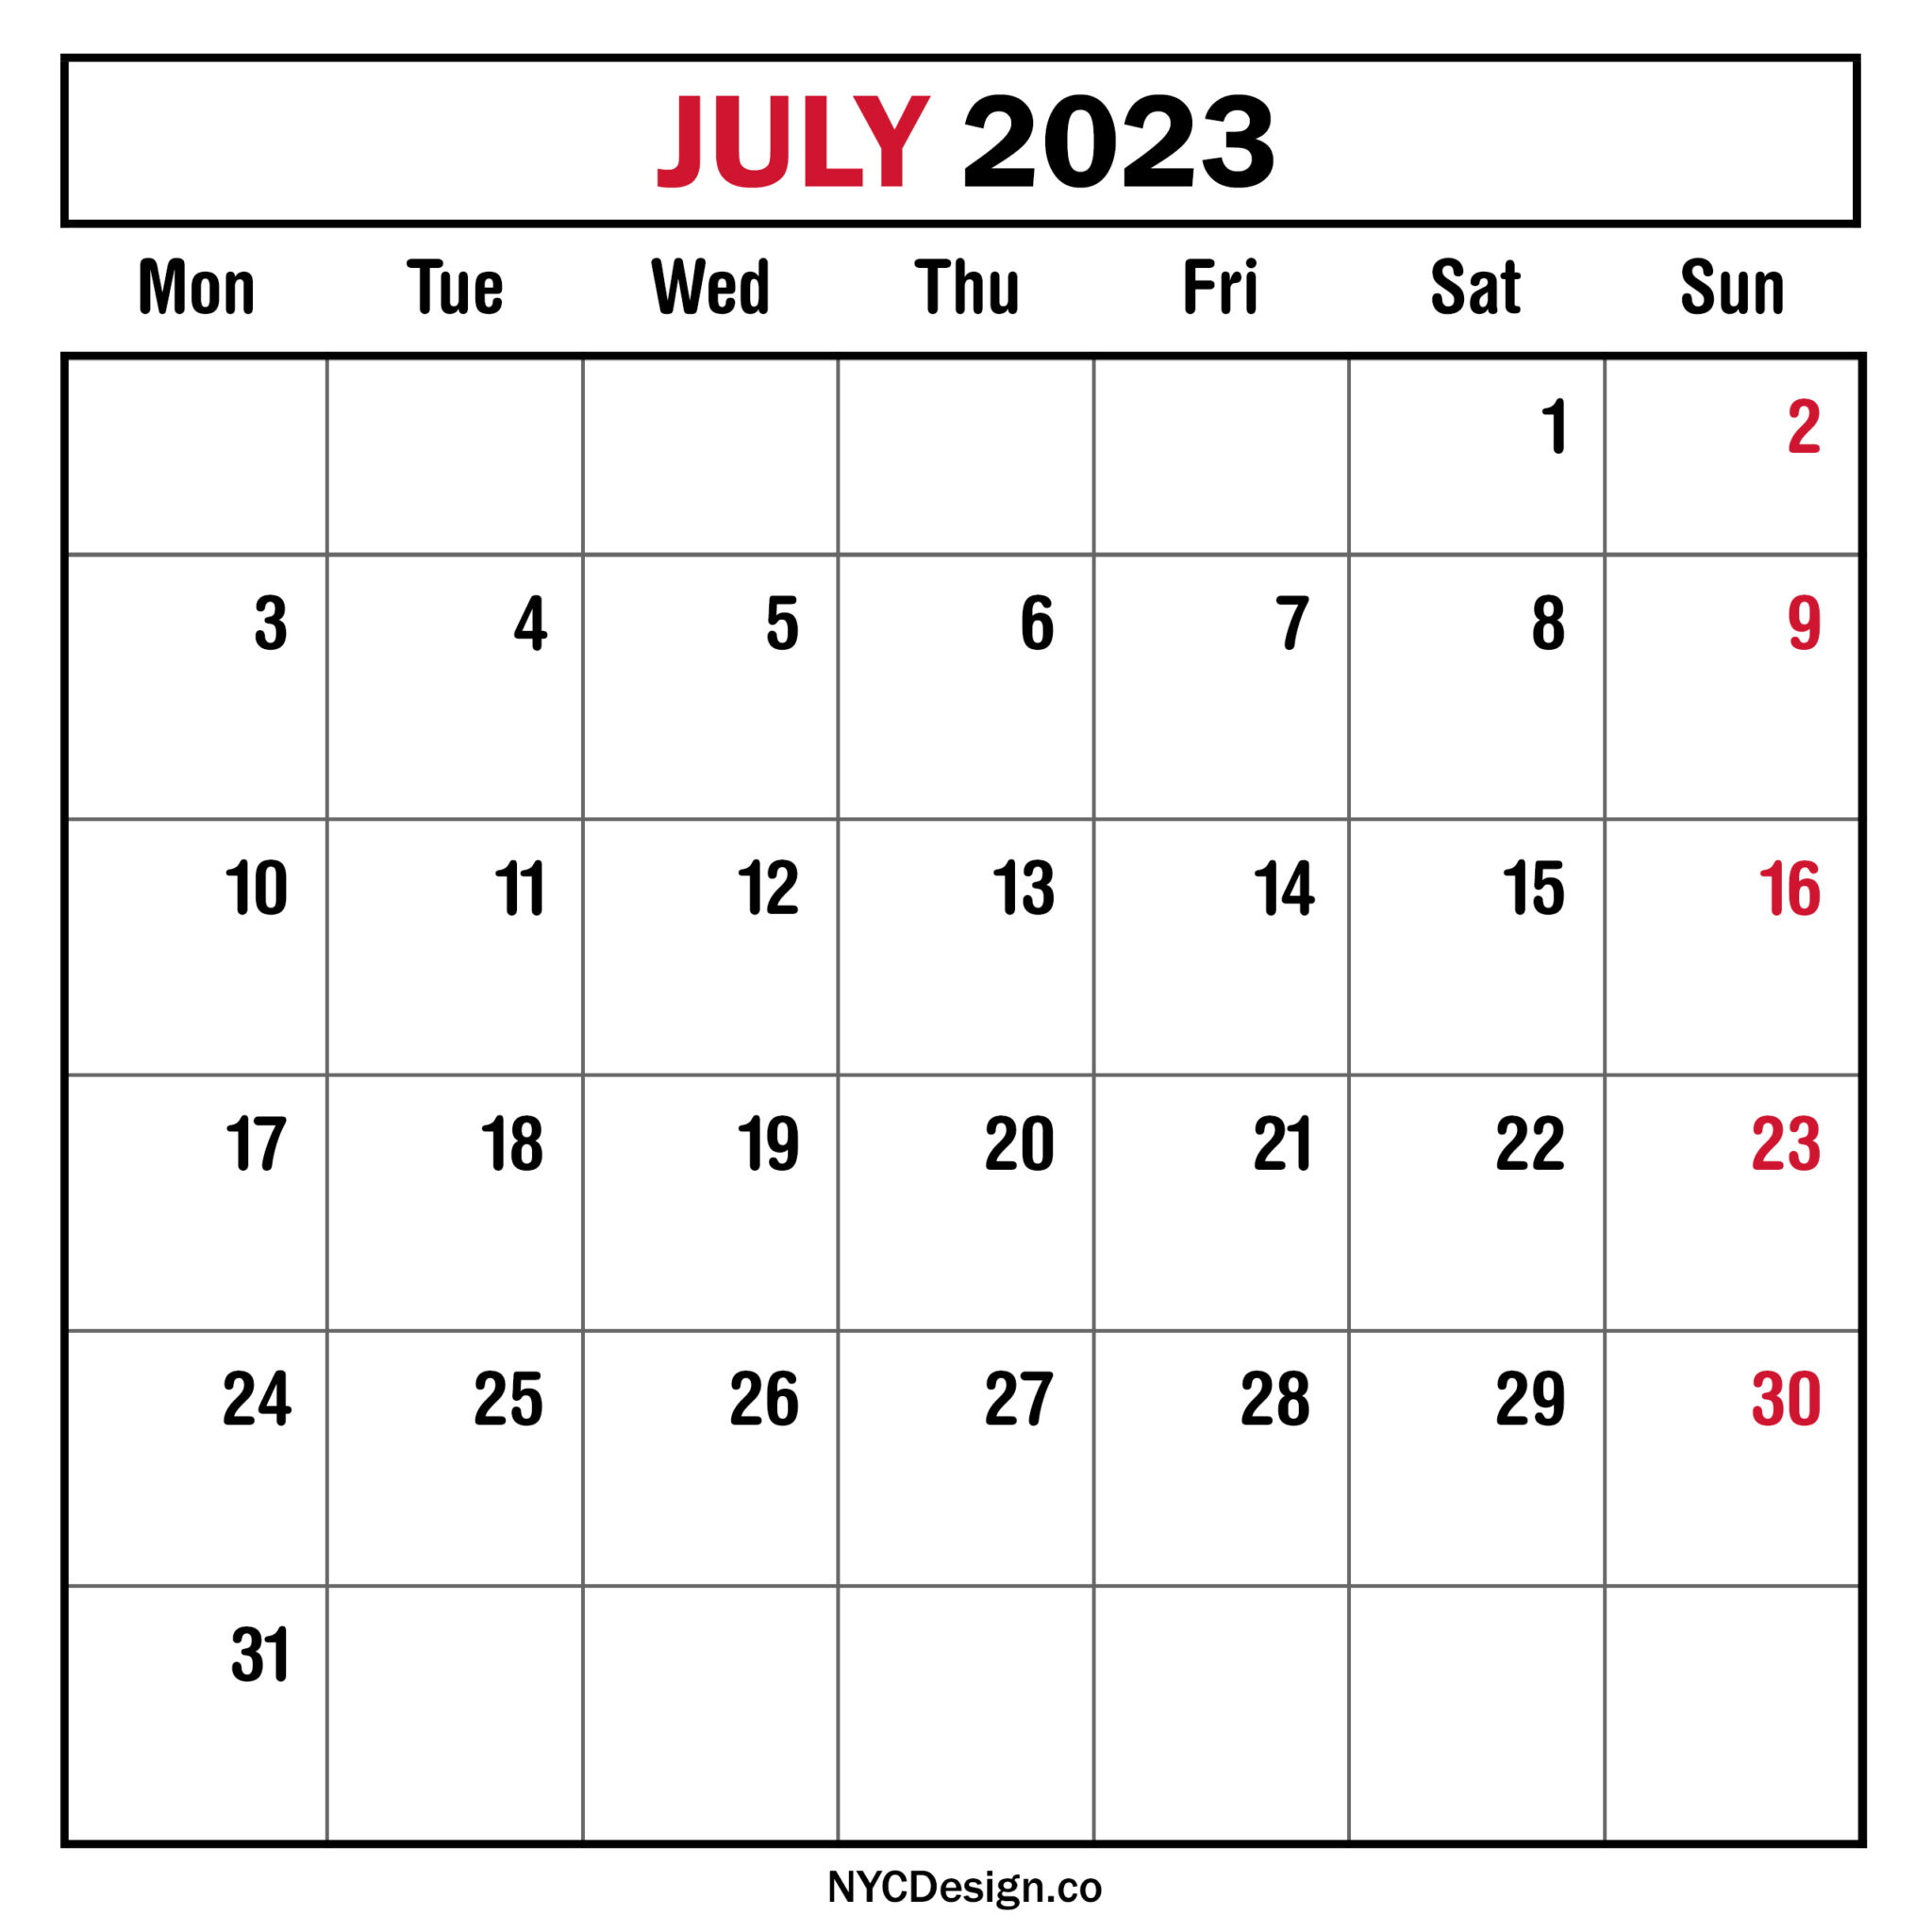 July 2023 Monthly Calendar, Planner, Printable Free – Monday Start ...